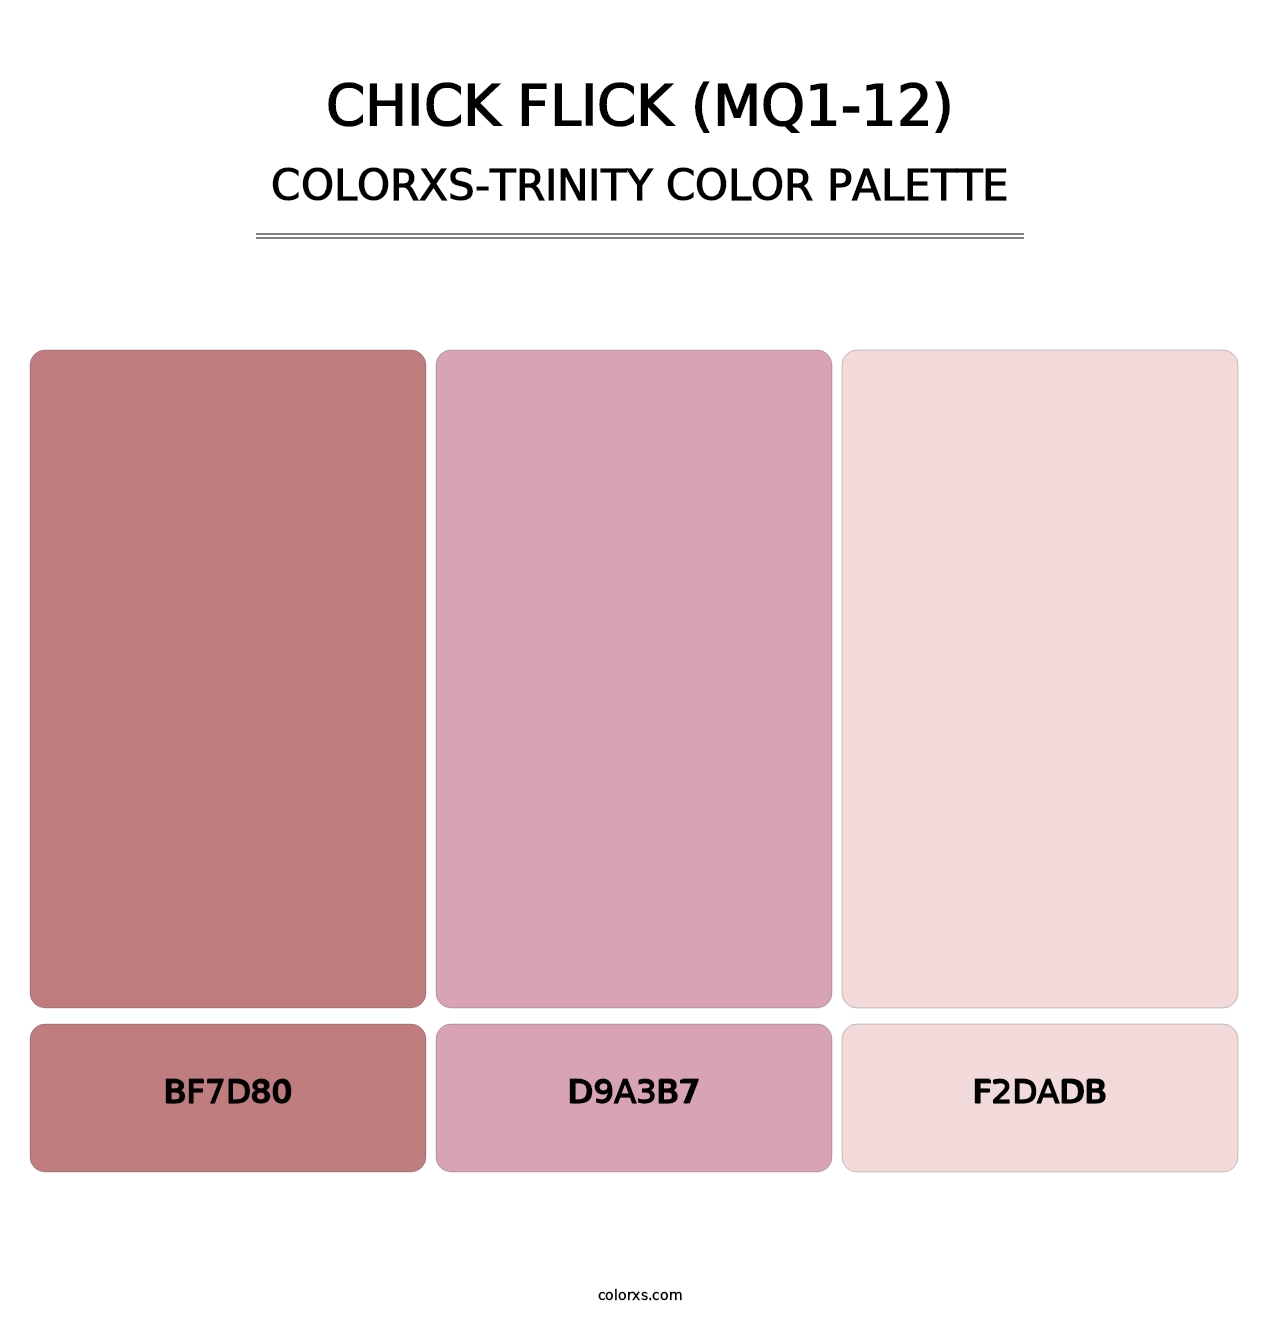 Chick Flick (MQ1-12) - Colorxs Trinity Palette